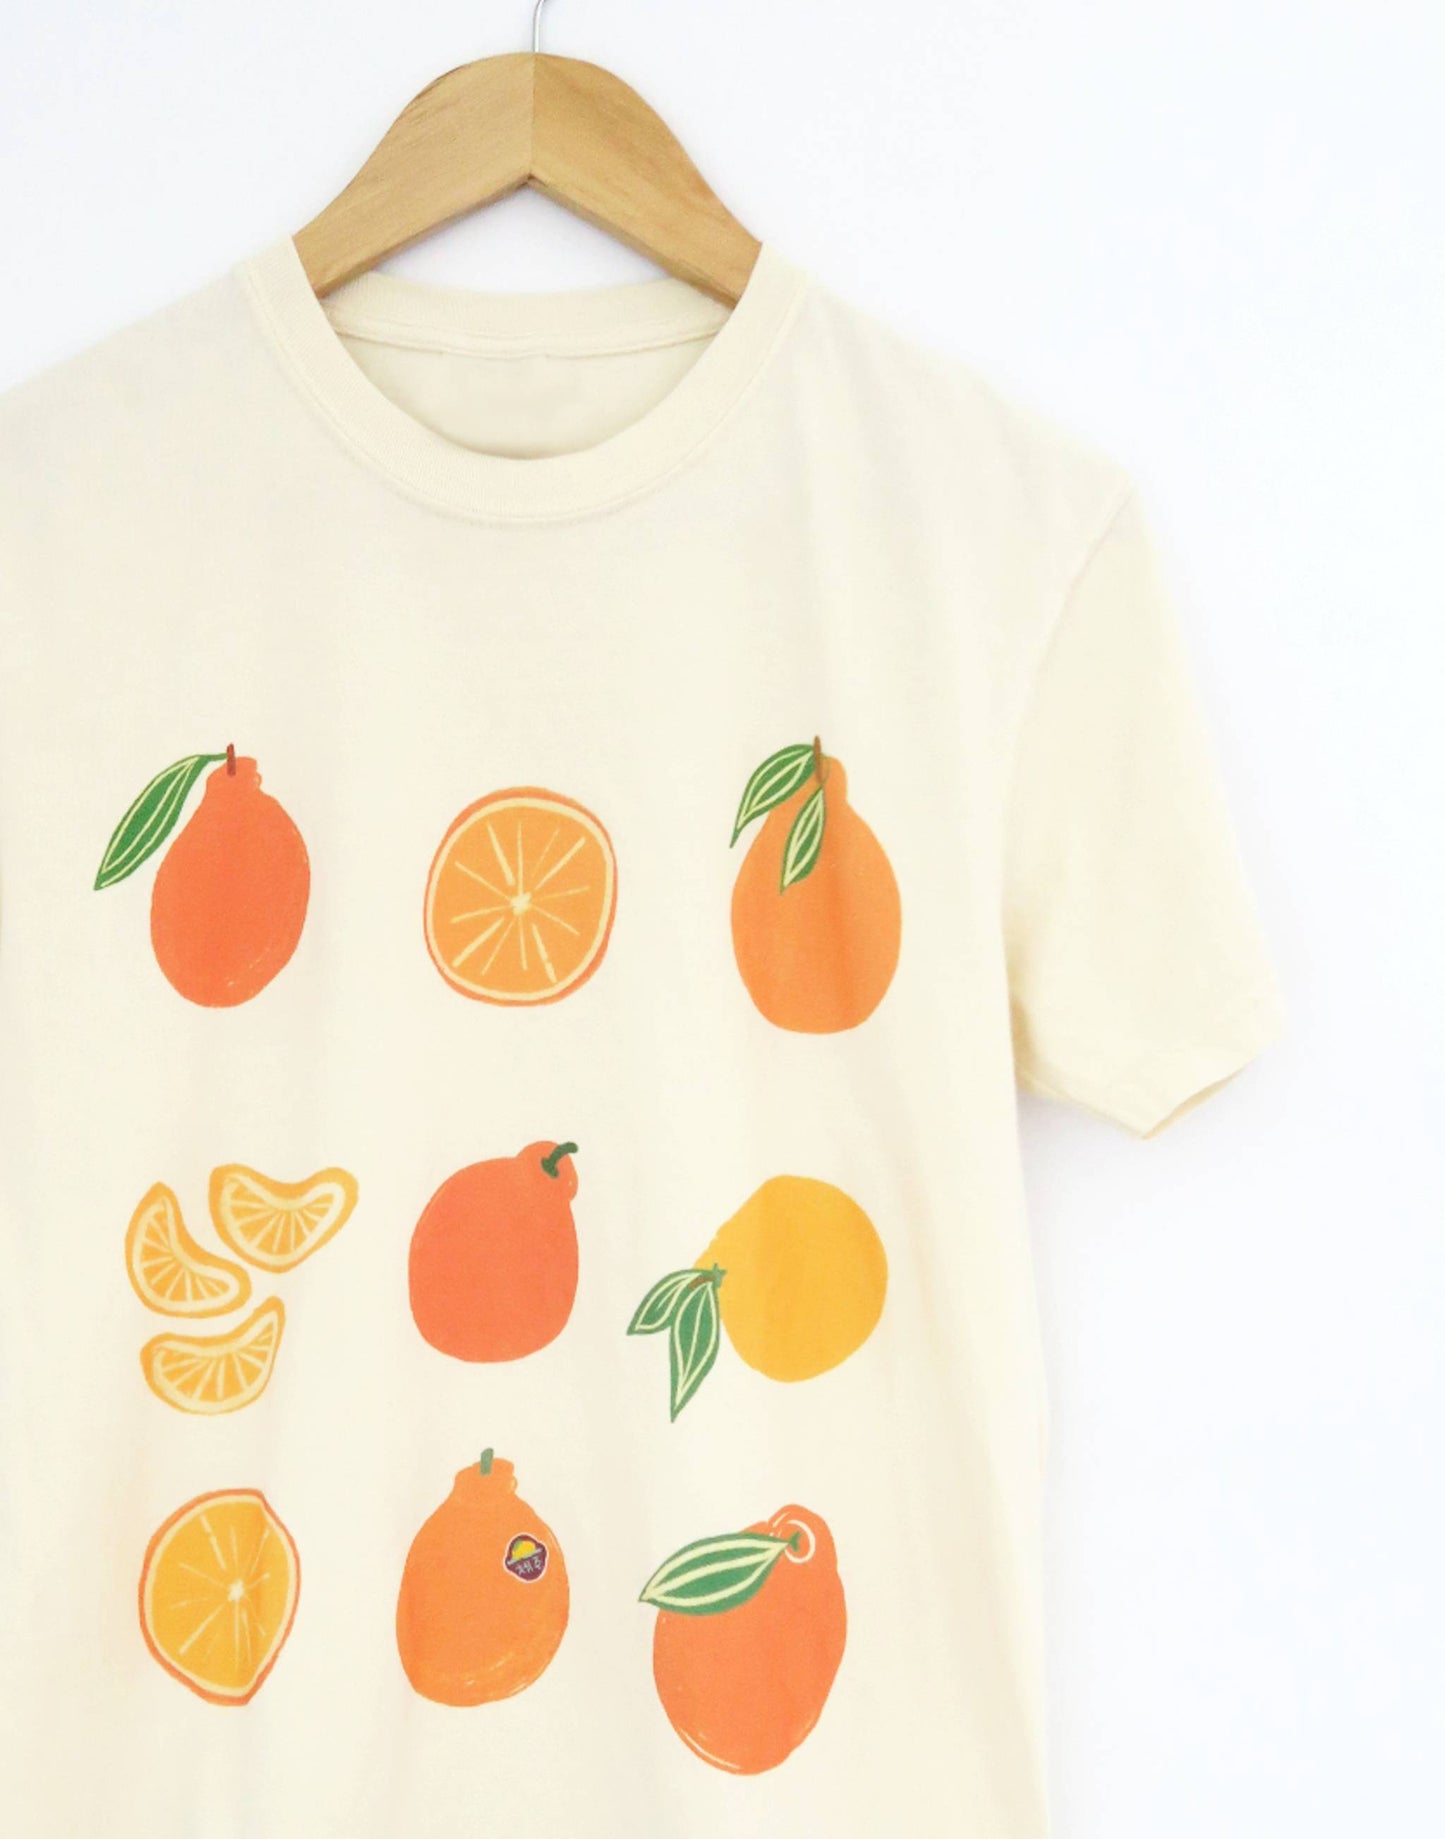 Jeju Tangerine Tee, Vintage Wash T-Shirt